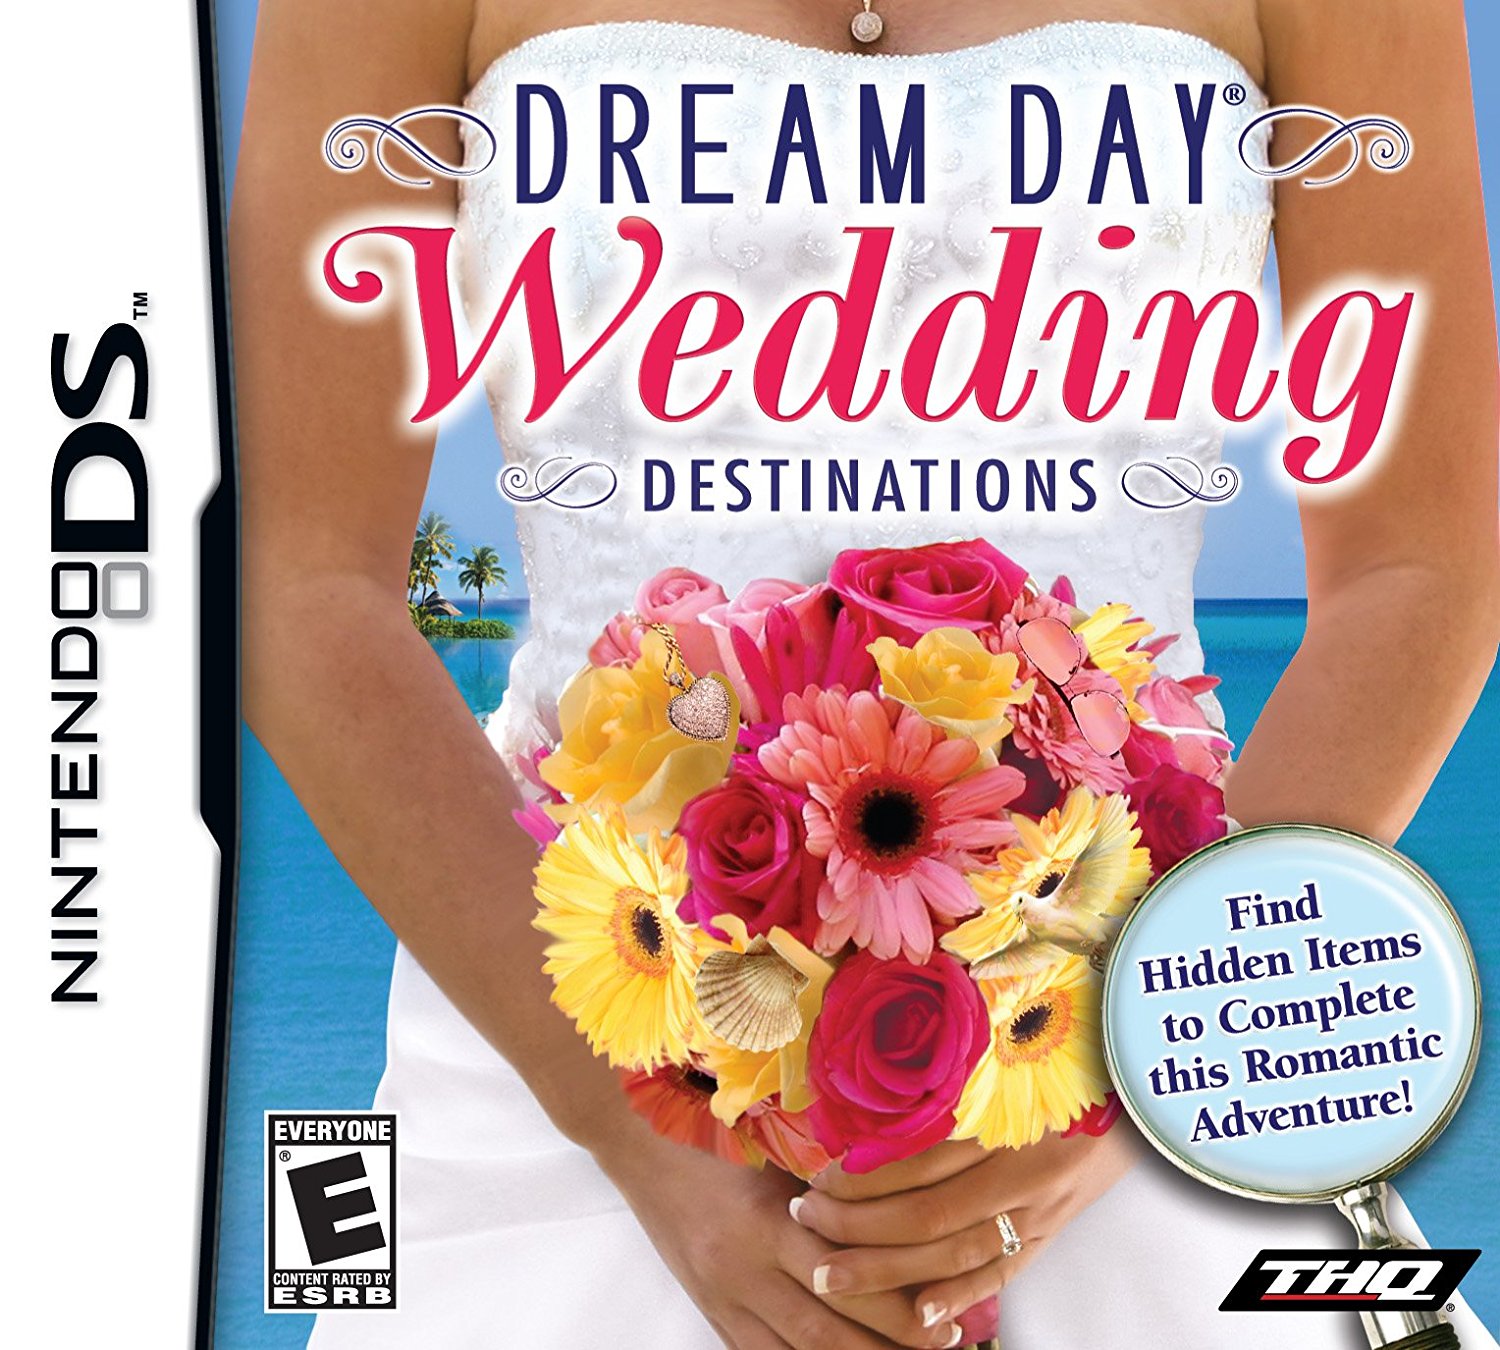 jaquette du jeu vidéo Dream Day Wedding Destinations